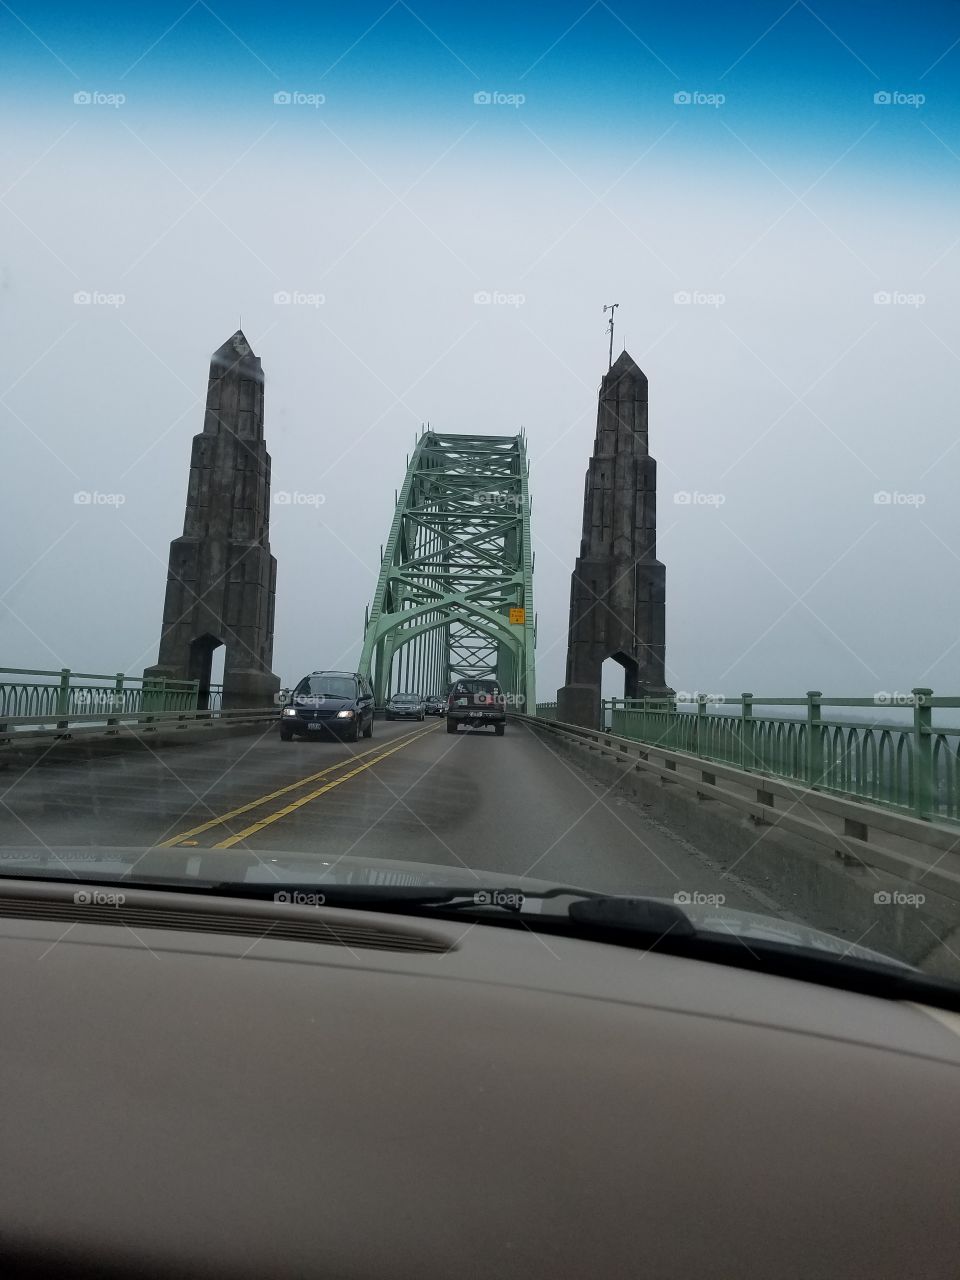 Creative bridge pillars